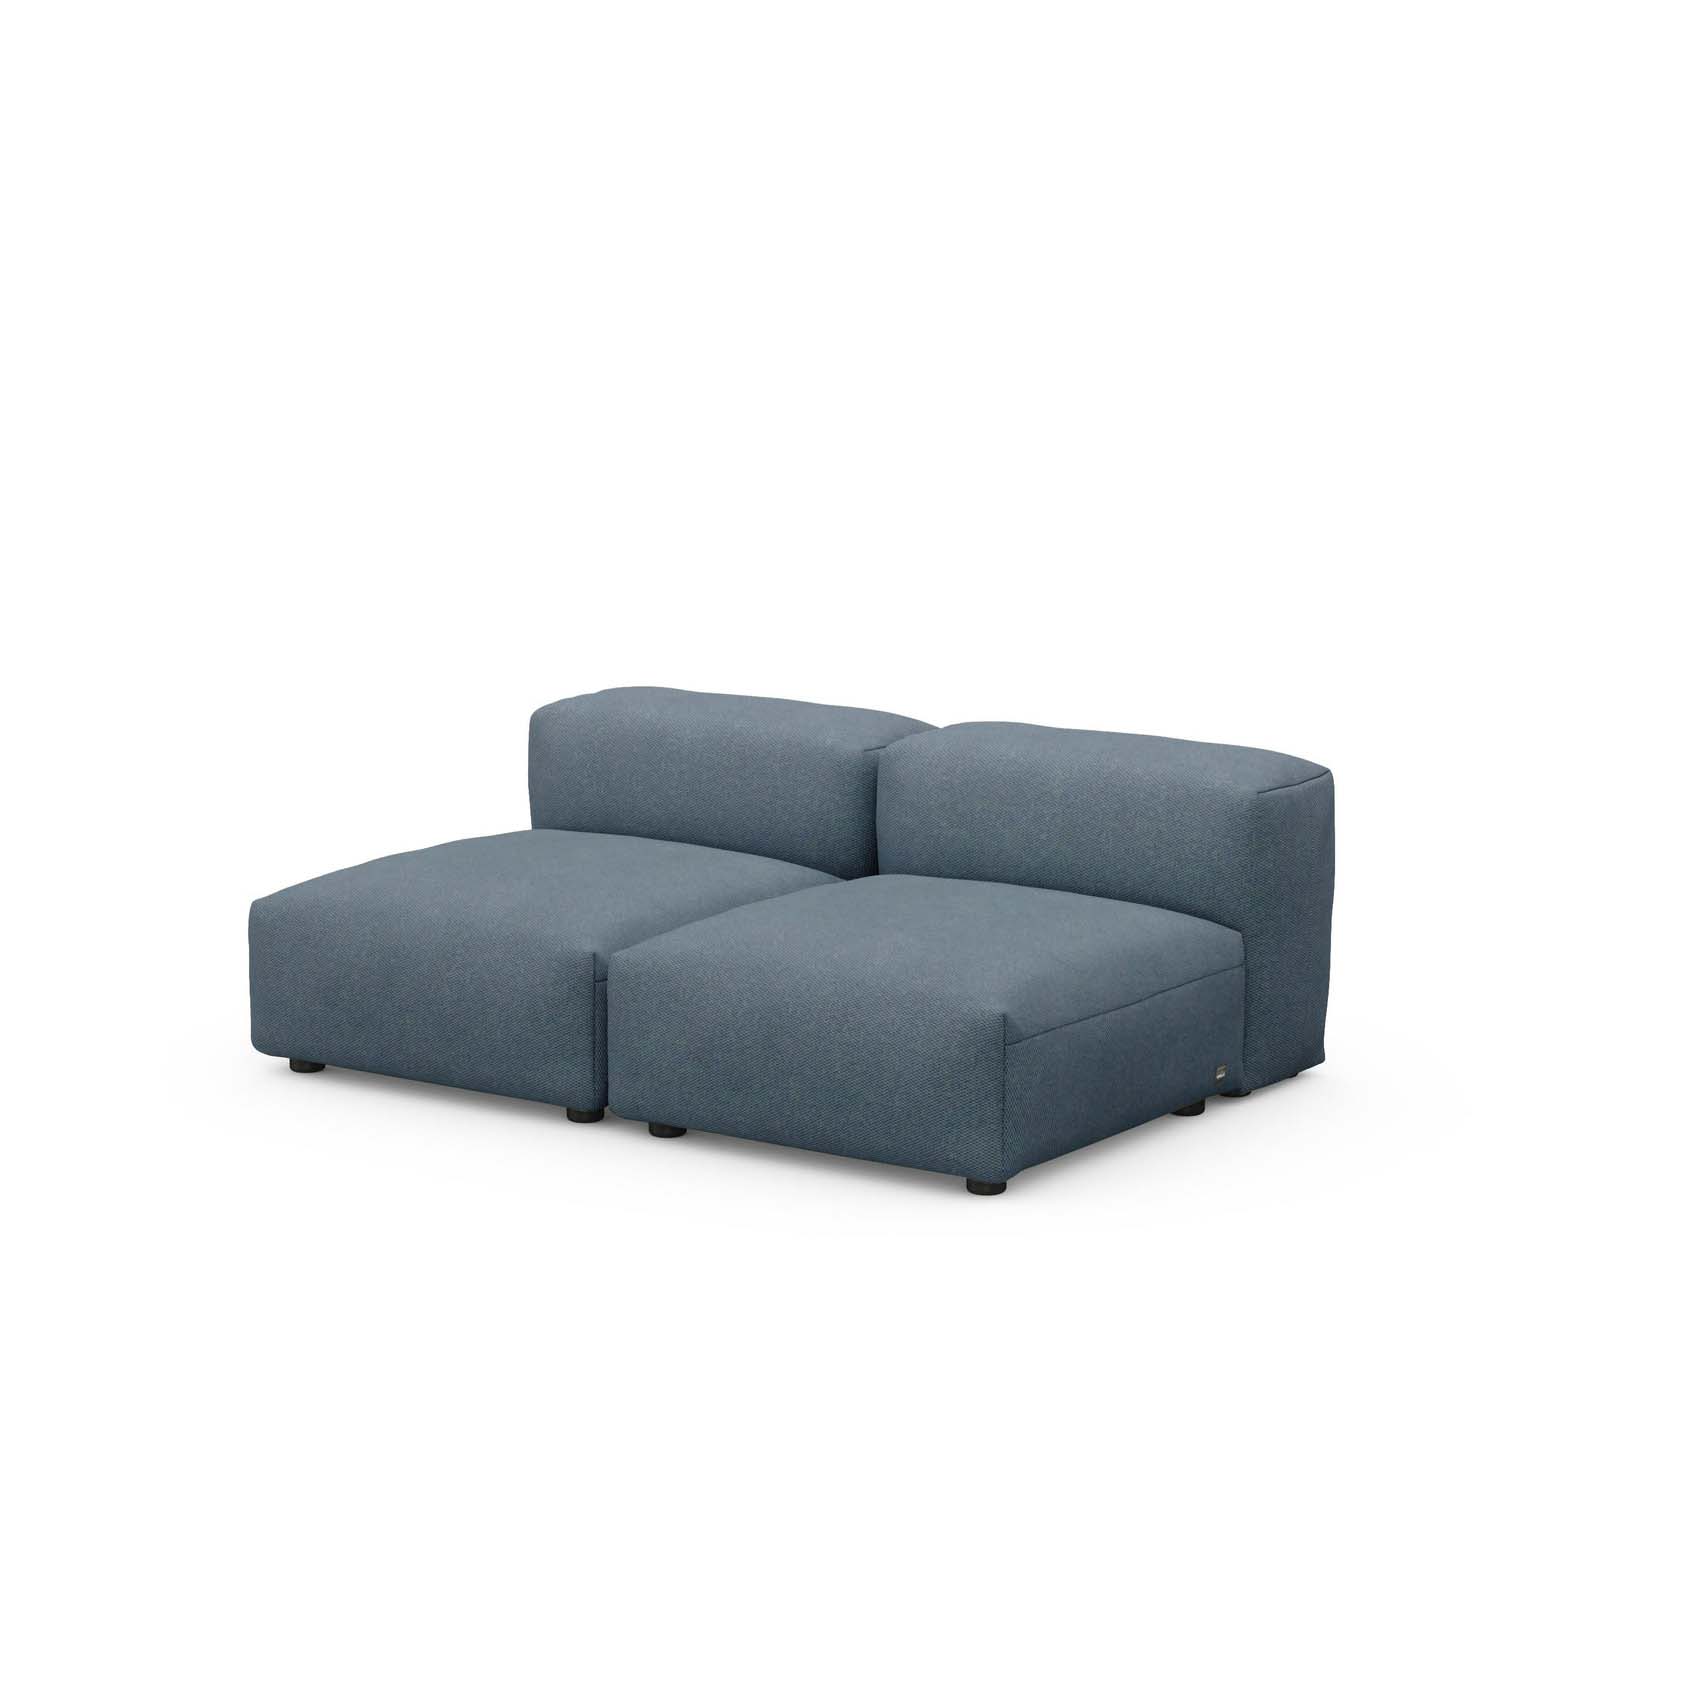 Two Seat Lounge Sofa S Pique Dark Blue